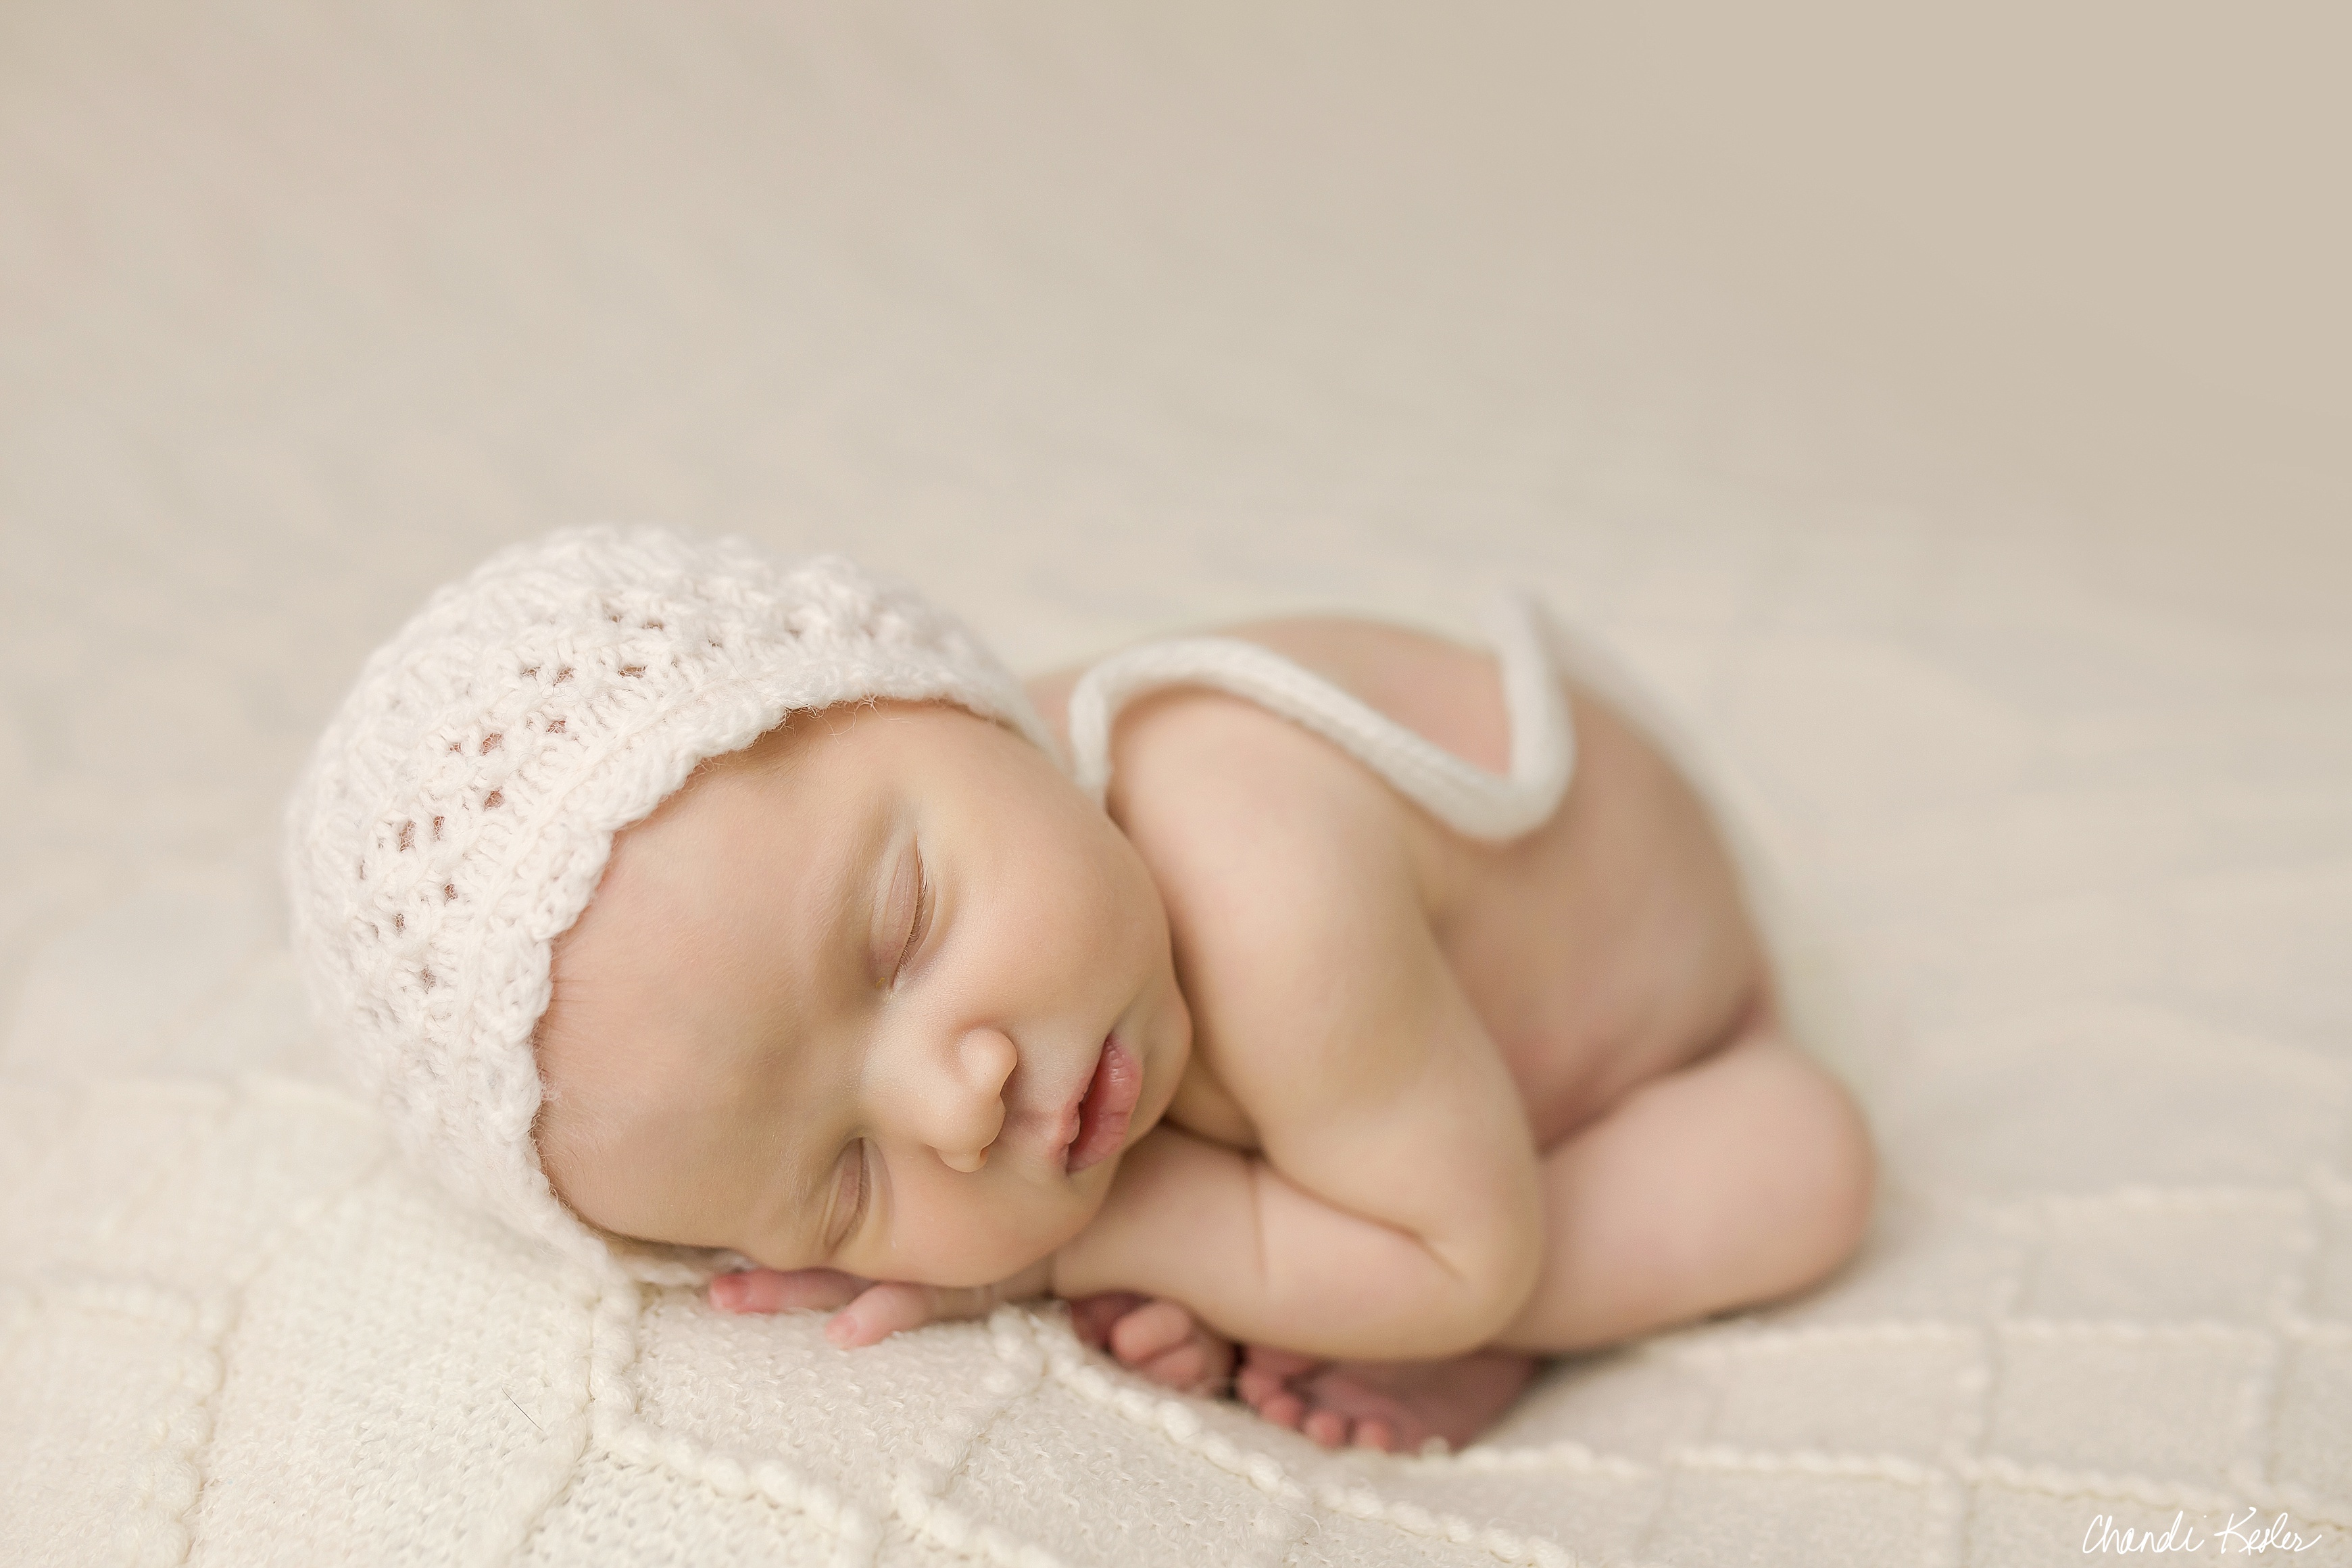 Eureka IL Newborn Photographer | Chandi Kesler Photography